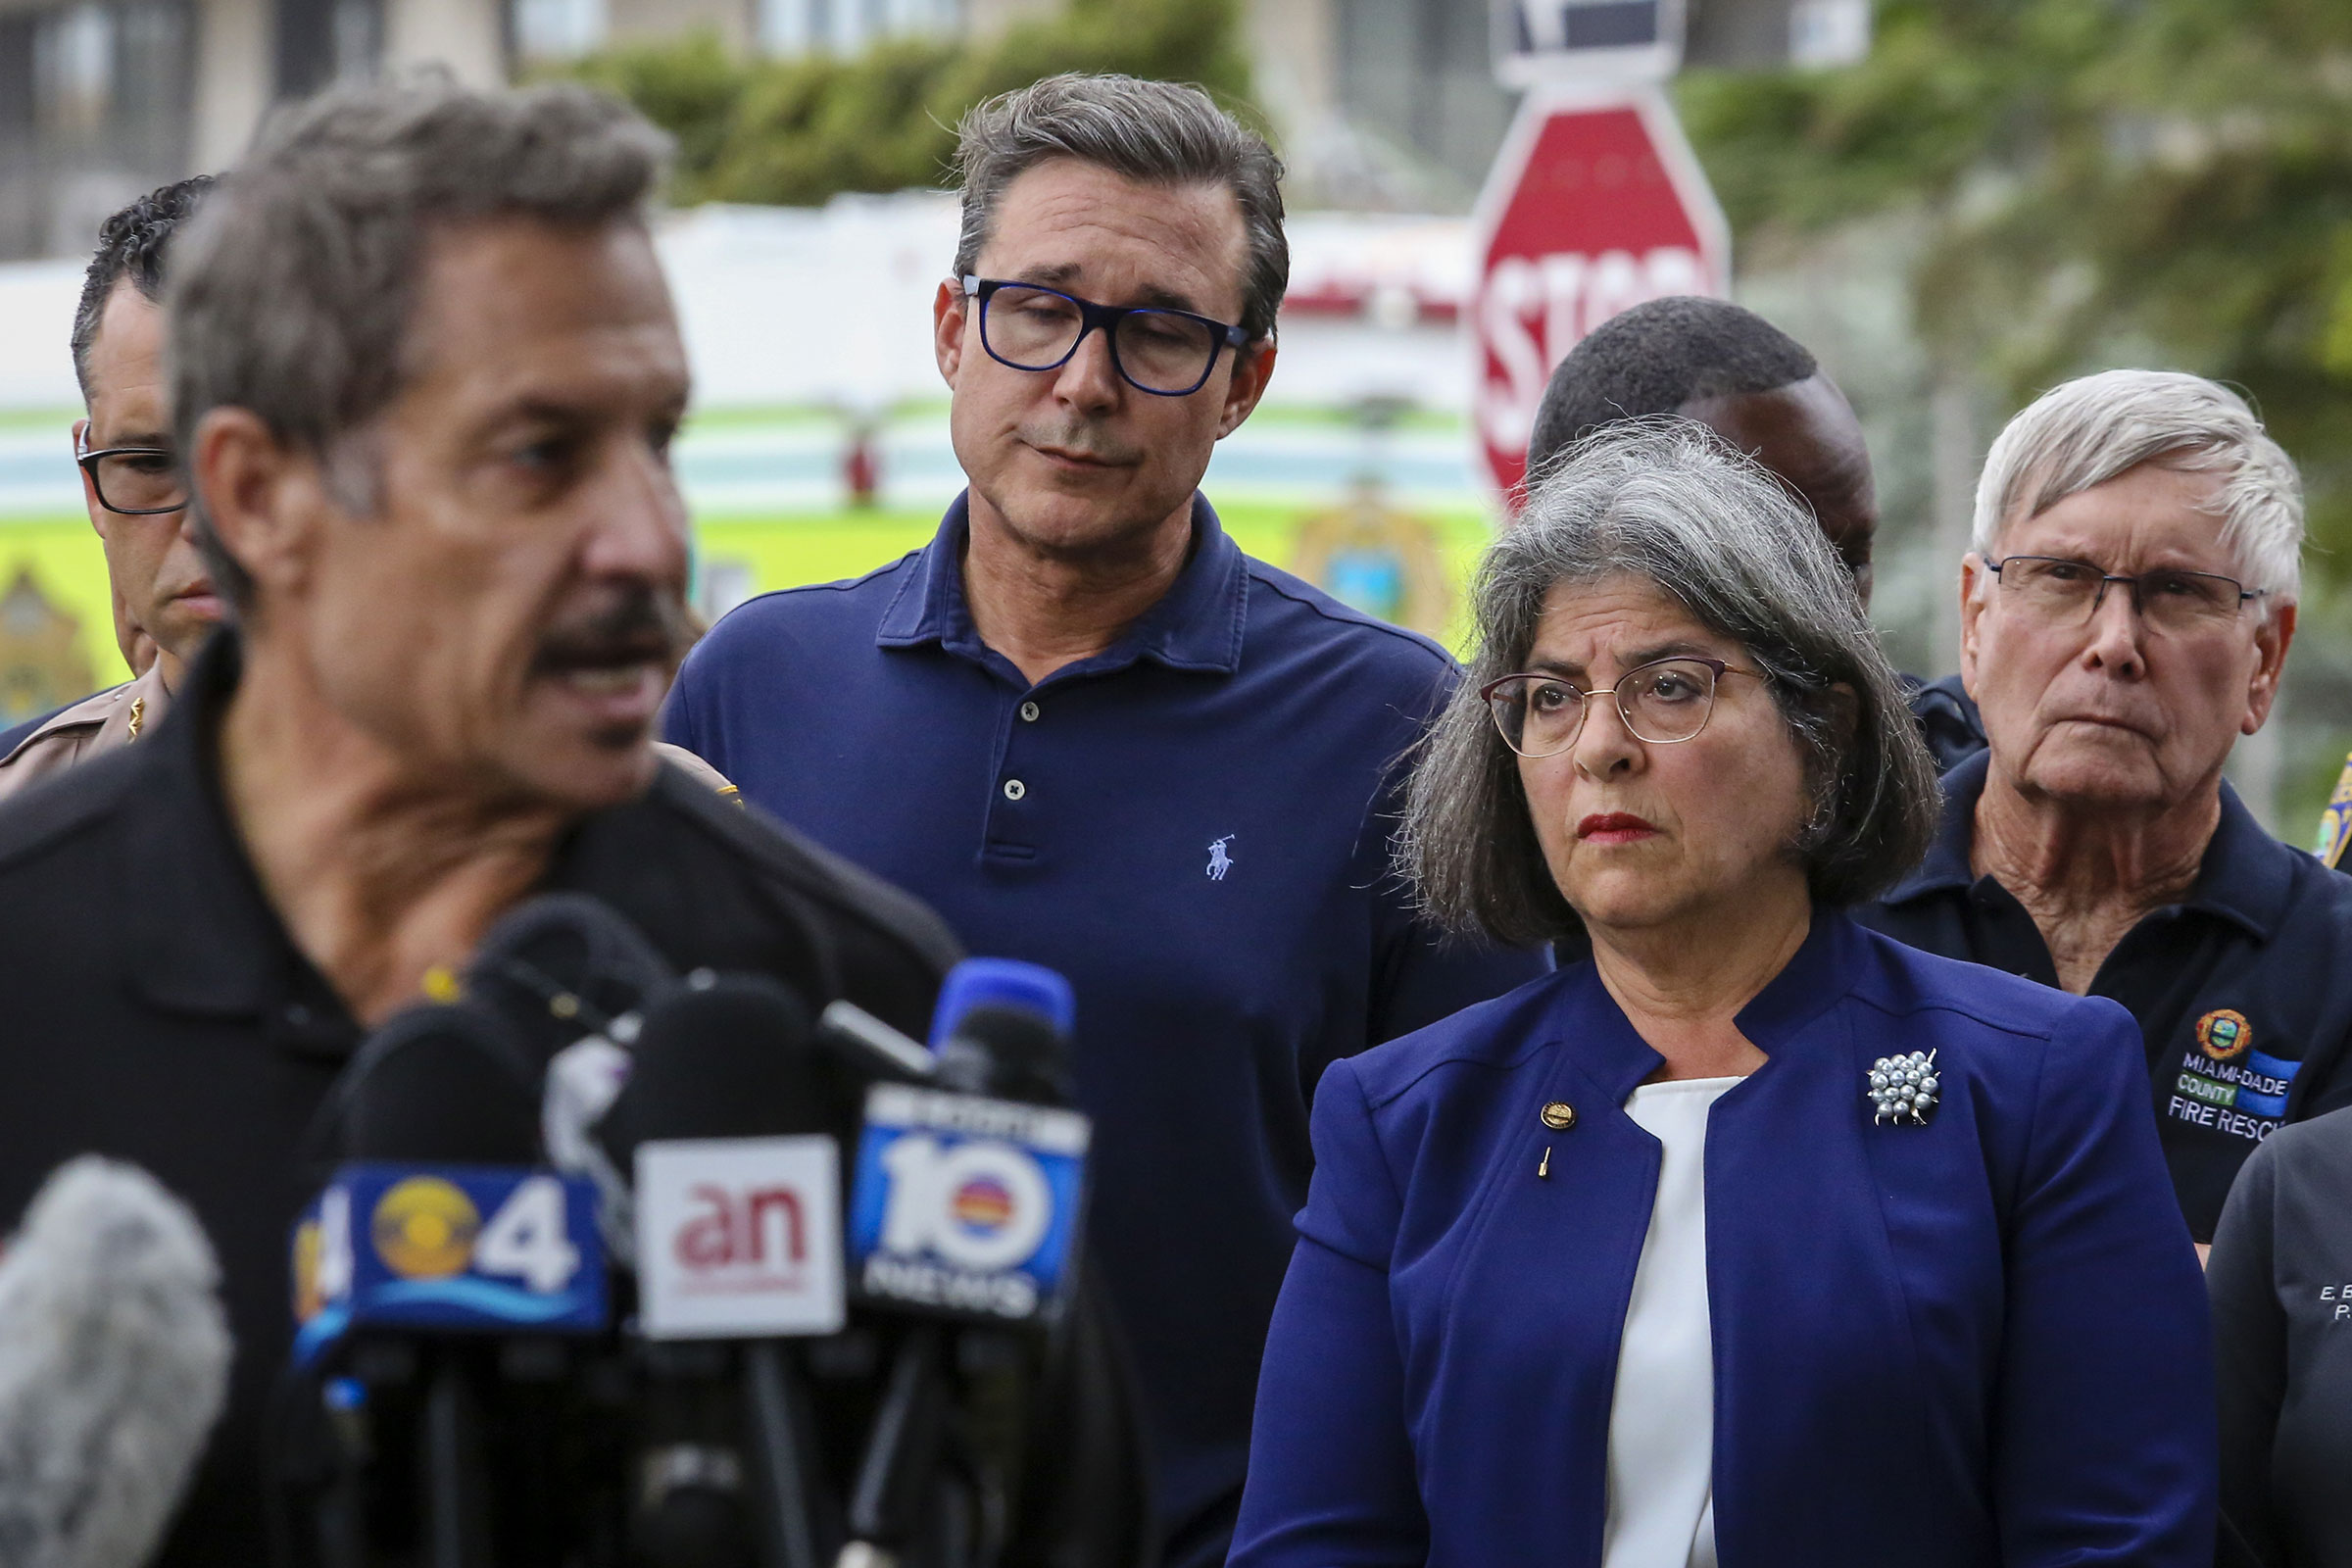 Miami-Dade County Mayor Daniella Levine Cava attends to a press conference on June 24. (Eva Marie Uzcategui Trinkl—Anadolu Agency/Getty Images)